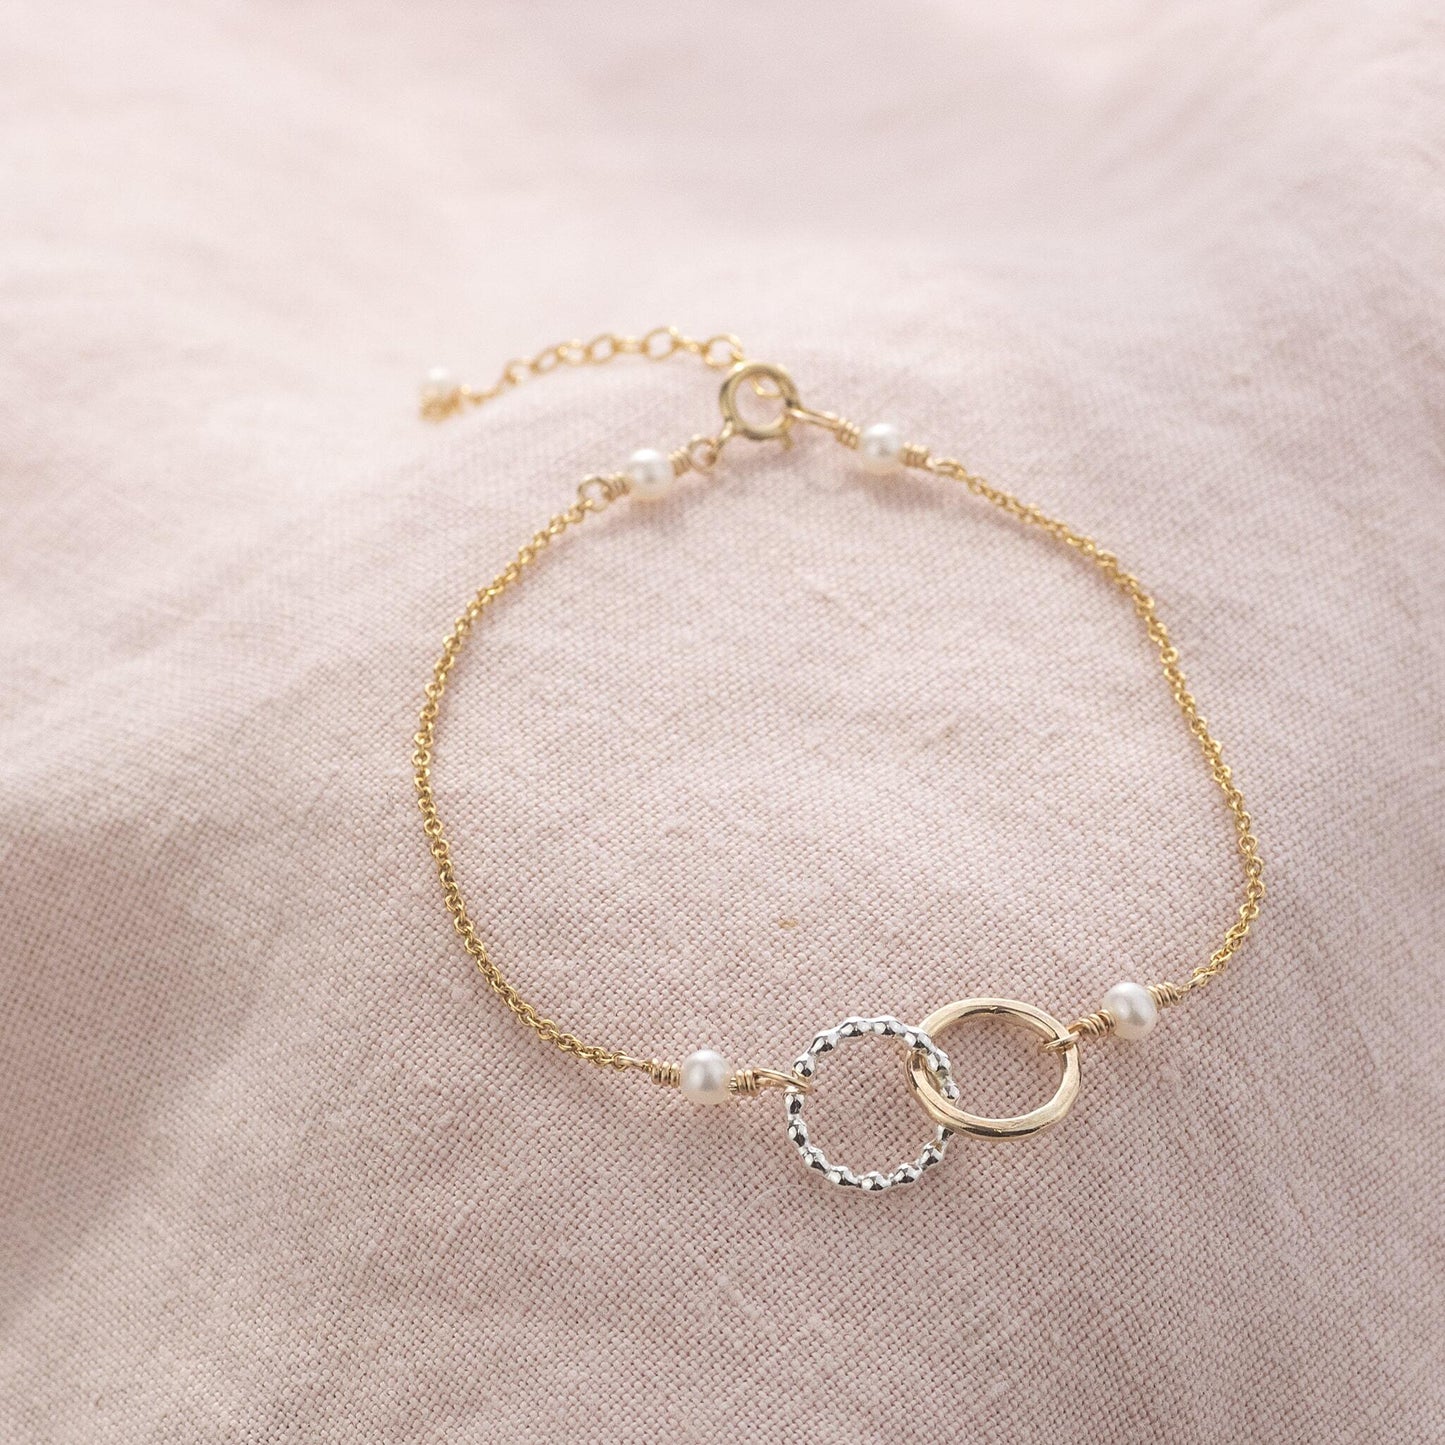 Gift for Friend & Bridesmaid - Love Link Bracelet - Silver & GoldGift for Friend & Bridesmaid - Pearl Love Link Bracelet - Silver & Gold